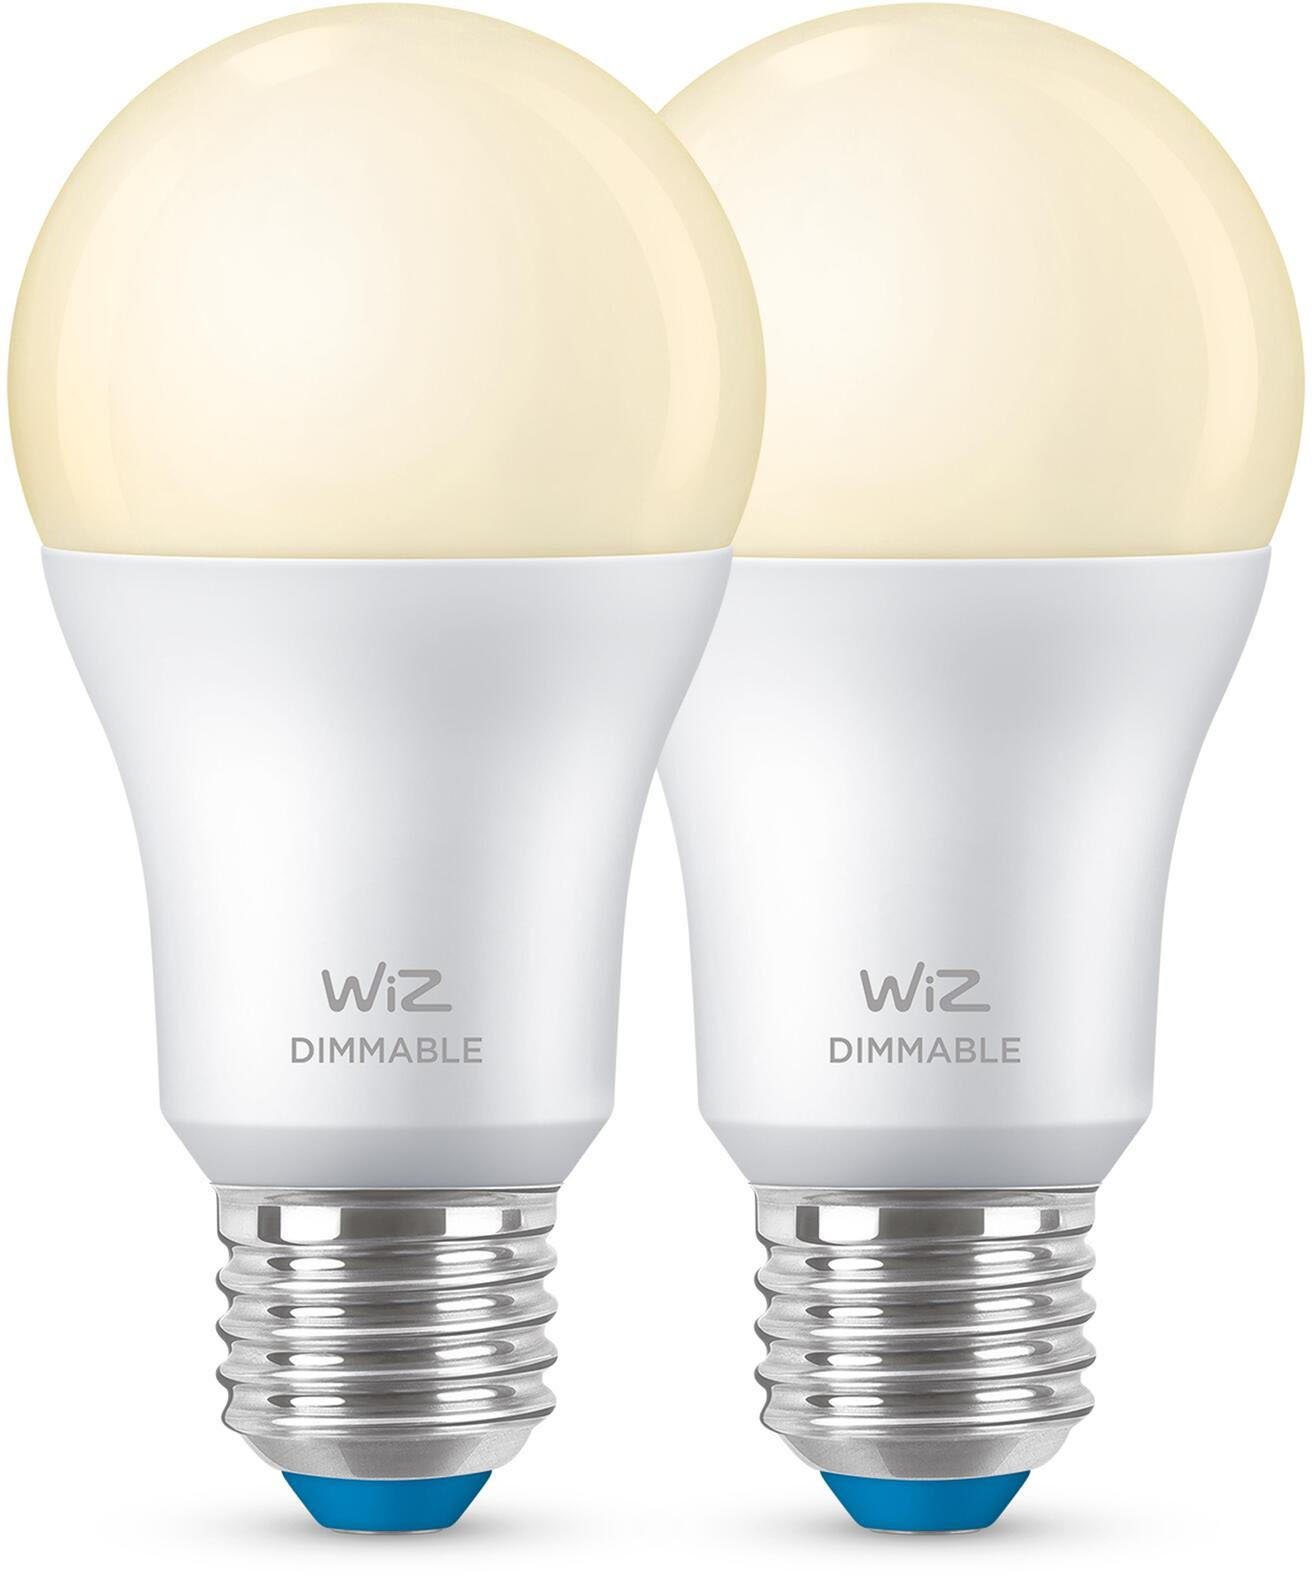 Dimmable Warmweiß Doppelpack, White matt E27 Standardform LED-Leuchtmittel 60W E27, WiZ